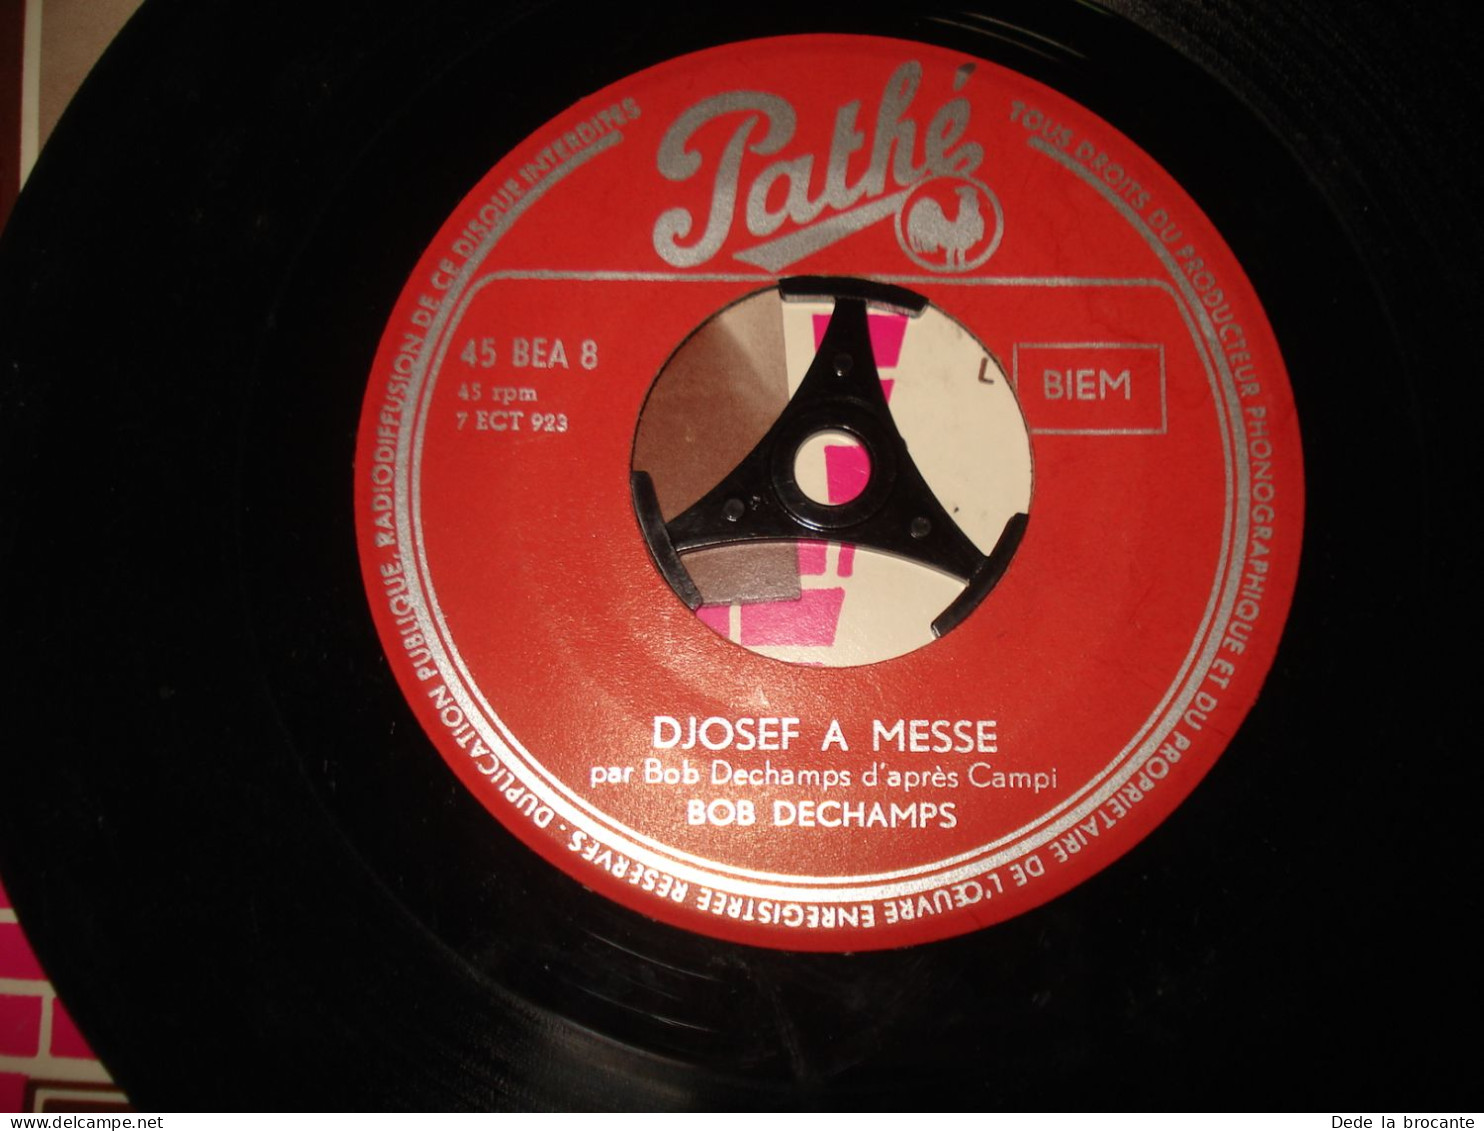 B12 (2) / Bob Dechamps – Djosef A Messe - EP – Pathé – 45 BEA 8 - BE 196?  EX/NM - Humour, Cabaret